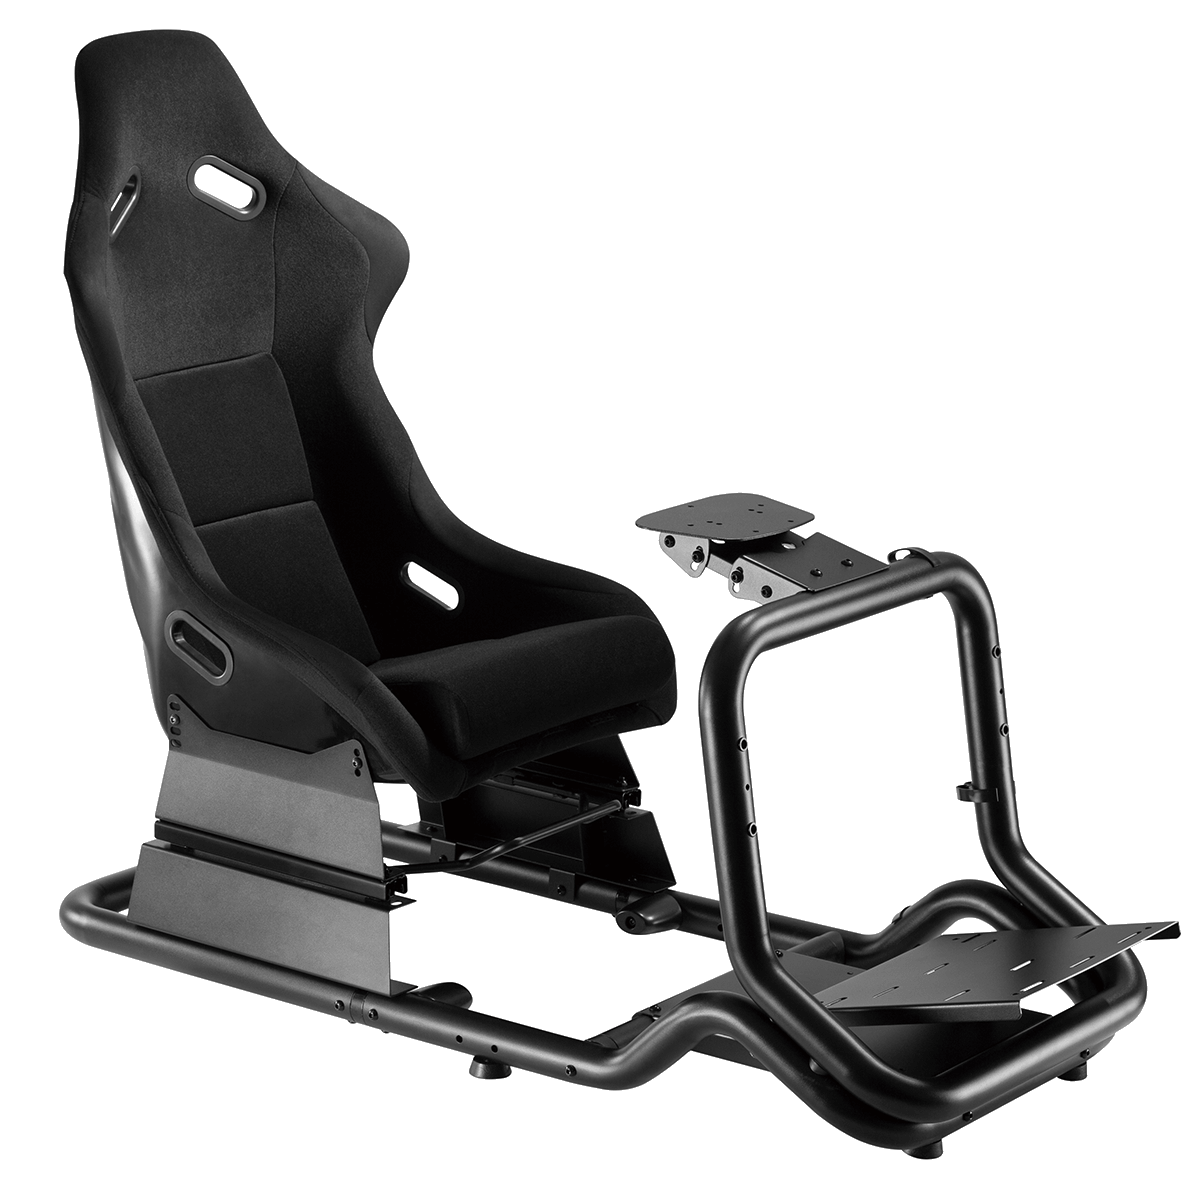 UVI Racing Seat PRO - Fully customizable racing simulation chair!